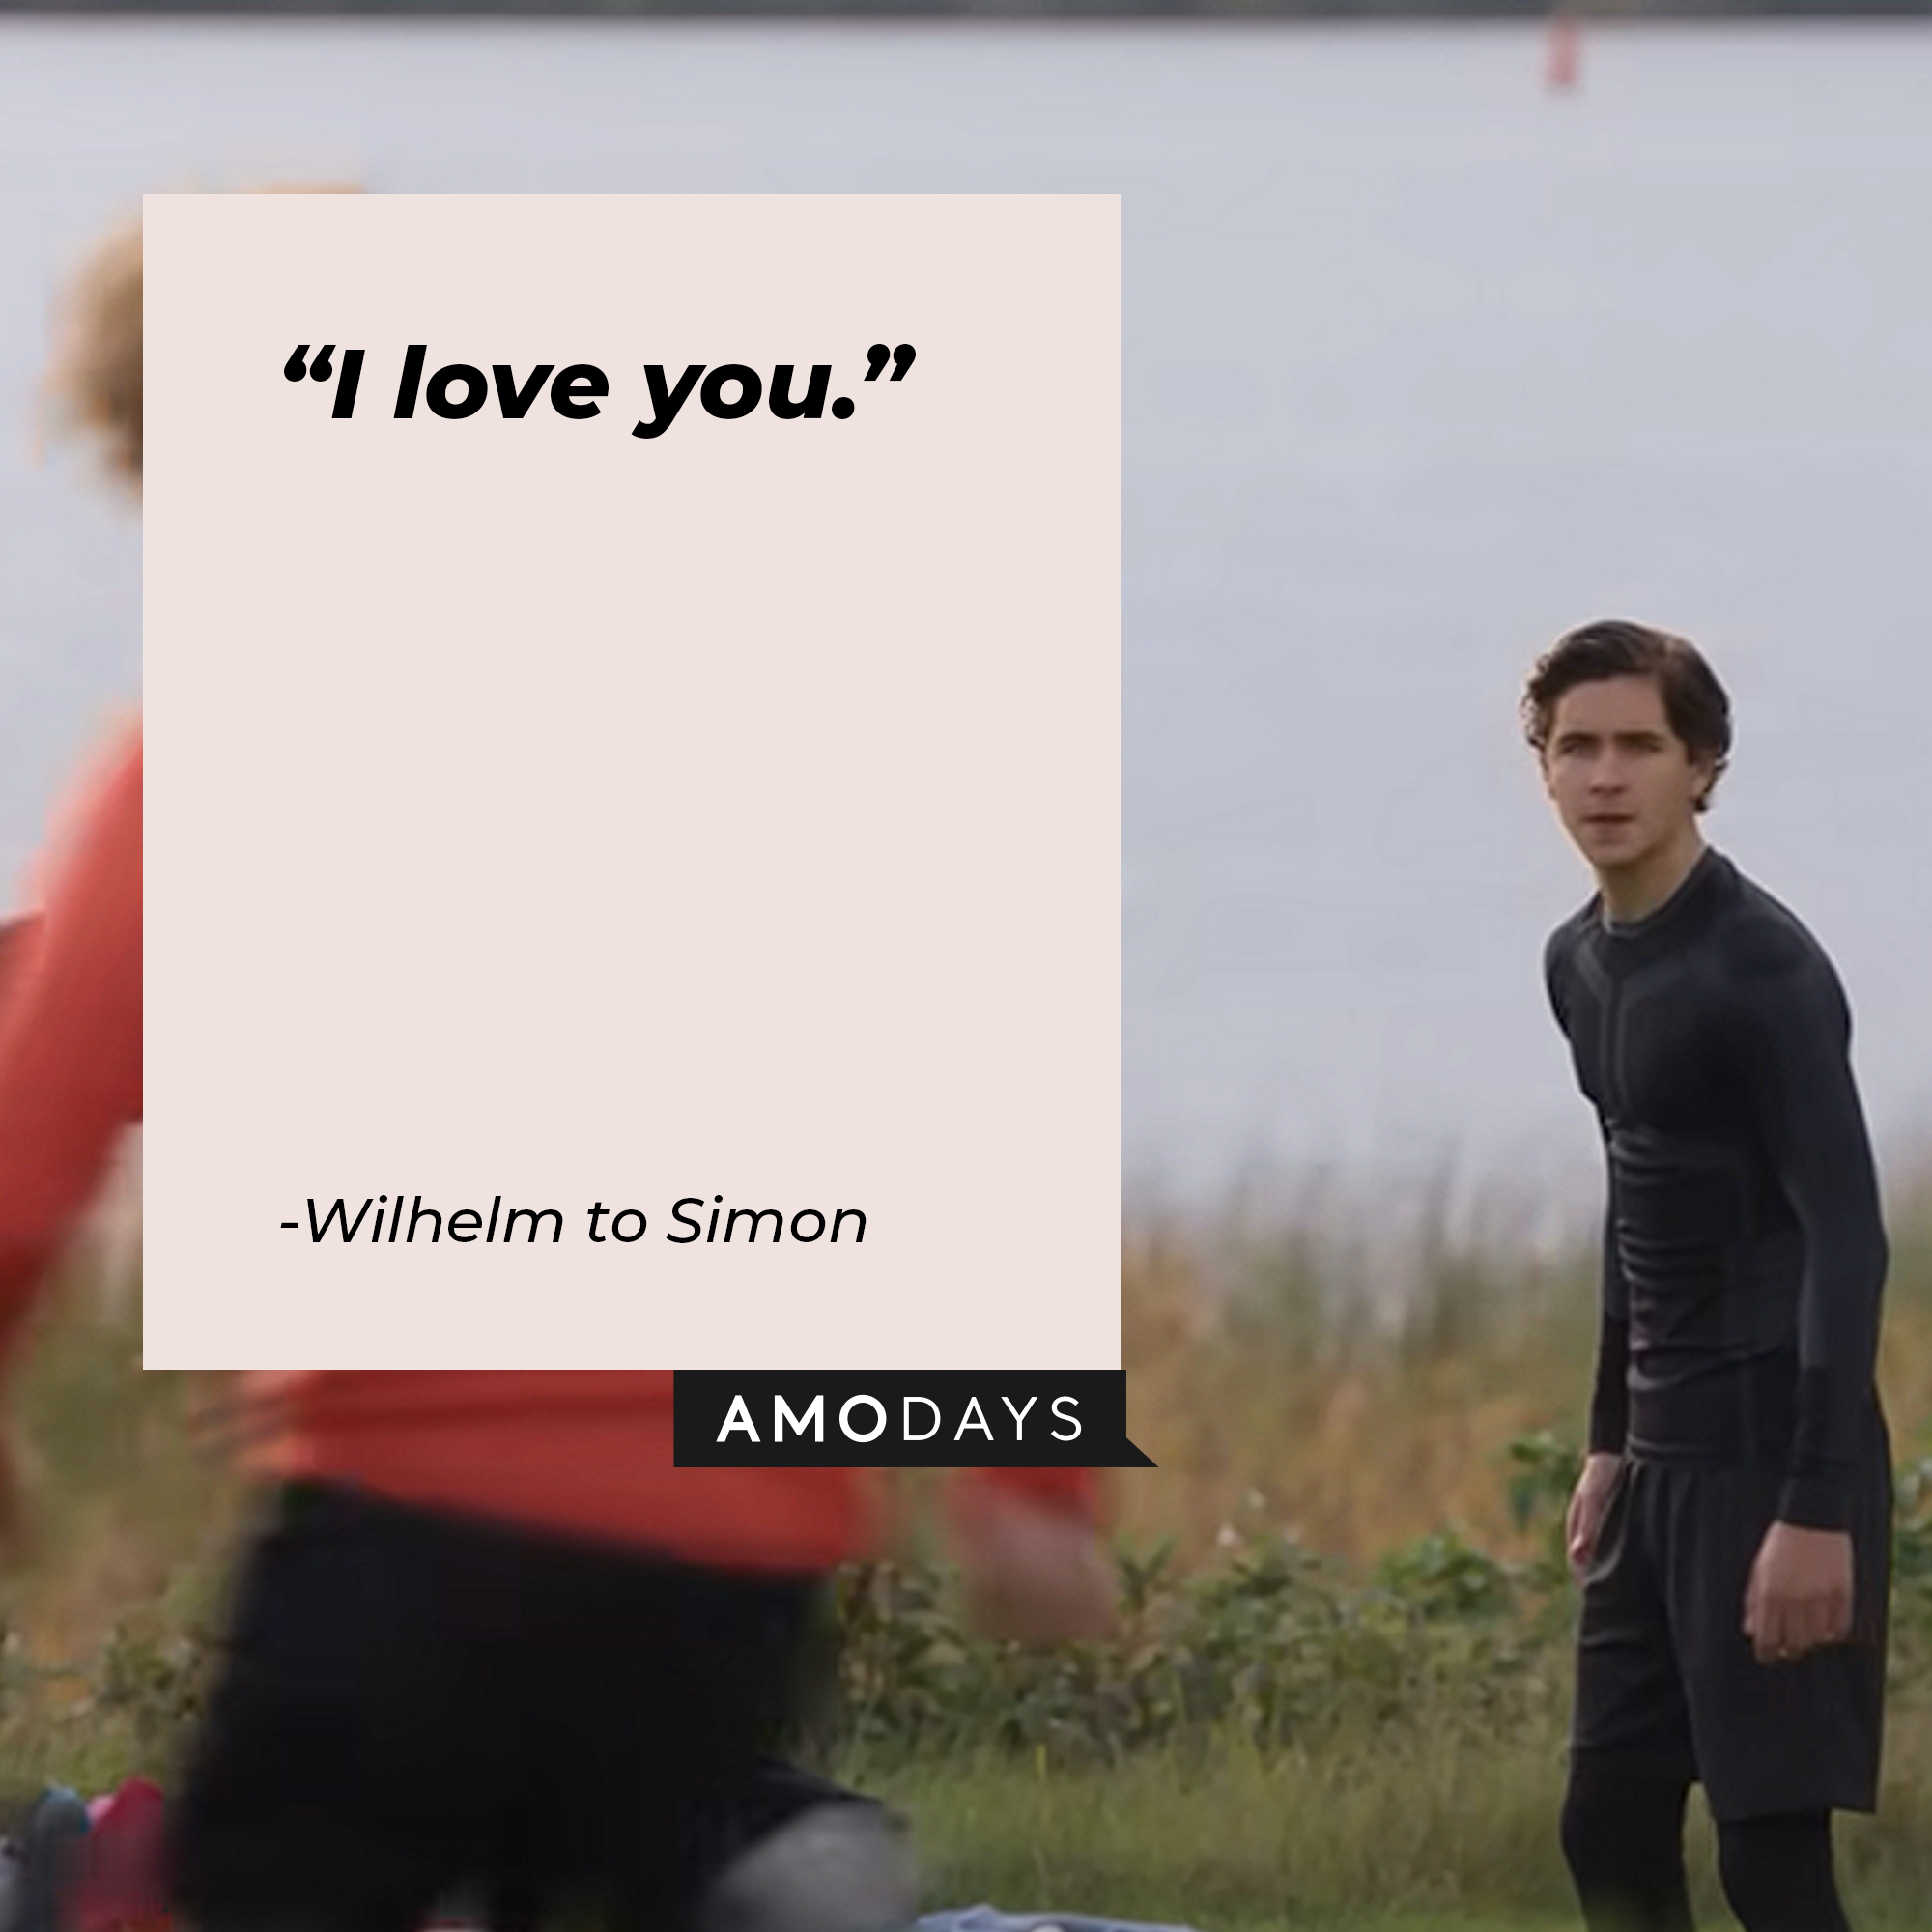 Wilhelm’s quote: "I love you."  | Image: Youtube.com/Netflix